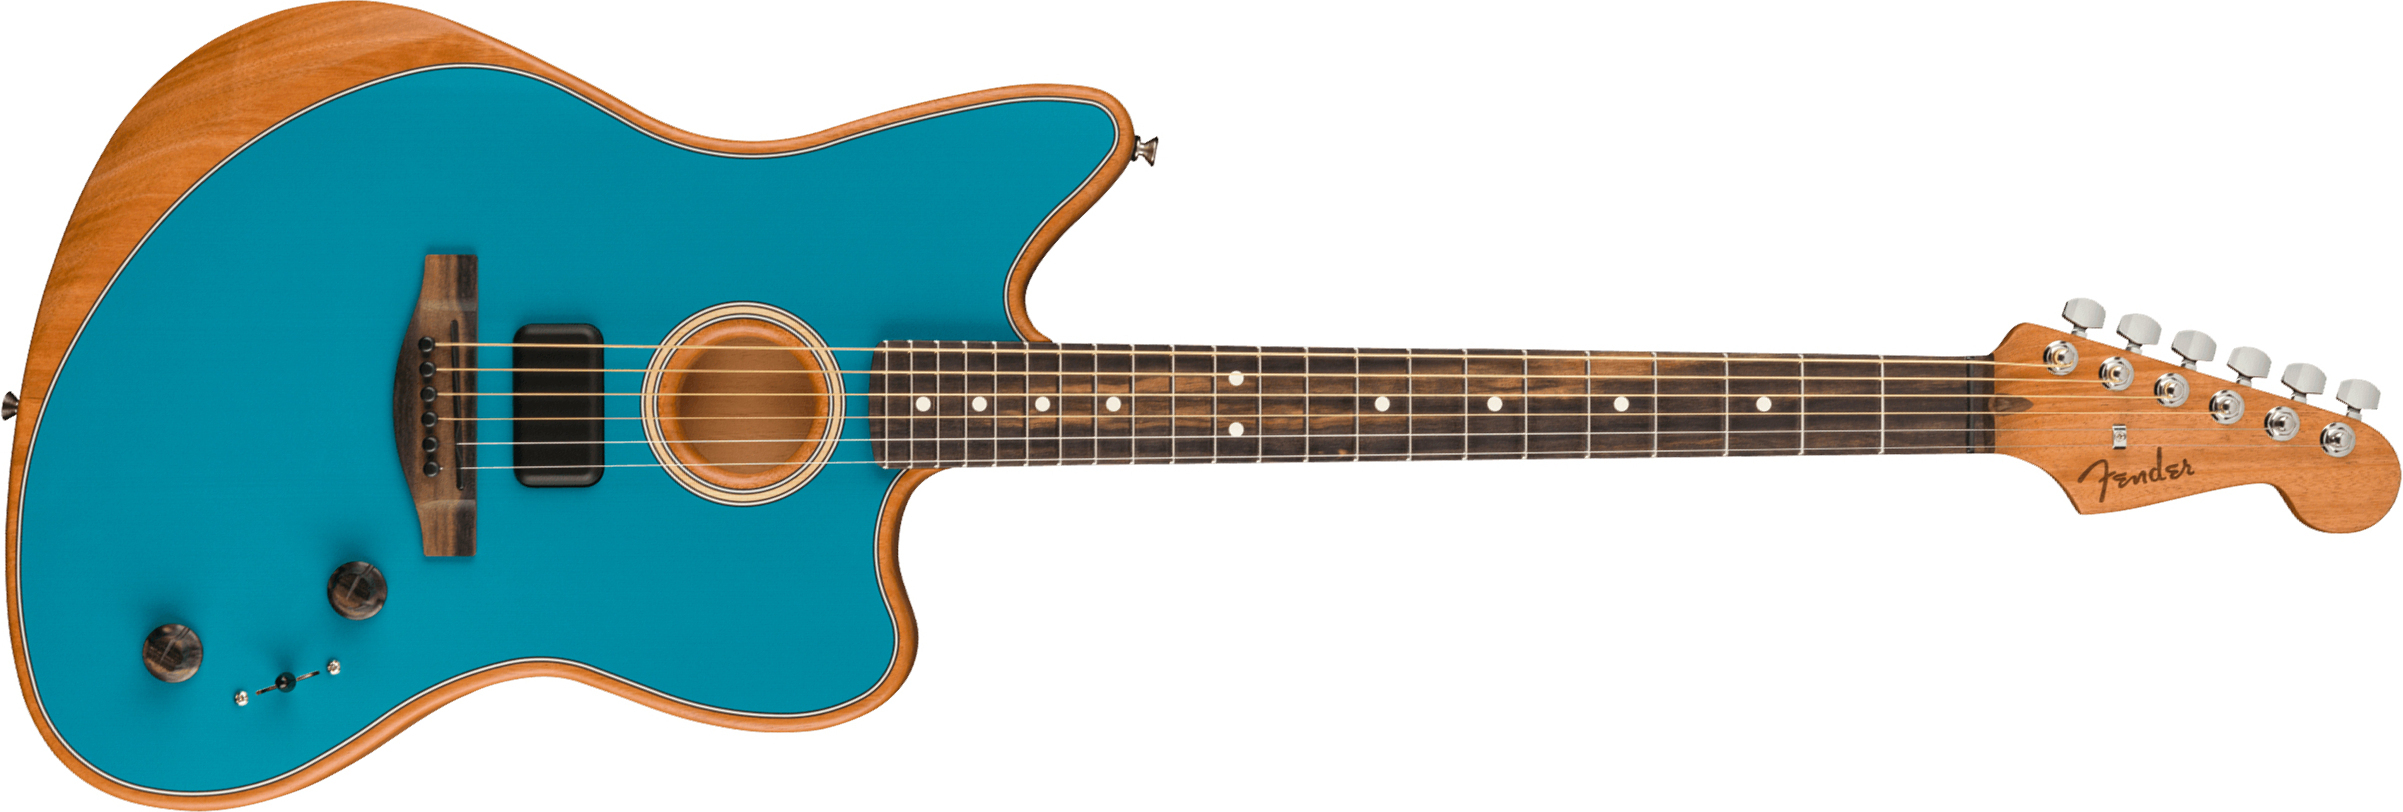 Fender American Acoustasonic Jazzmaster Usa Eb - Ocean Turquoise - Elektroakustische Gitarre - Main picture